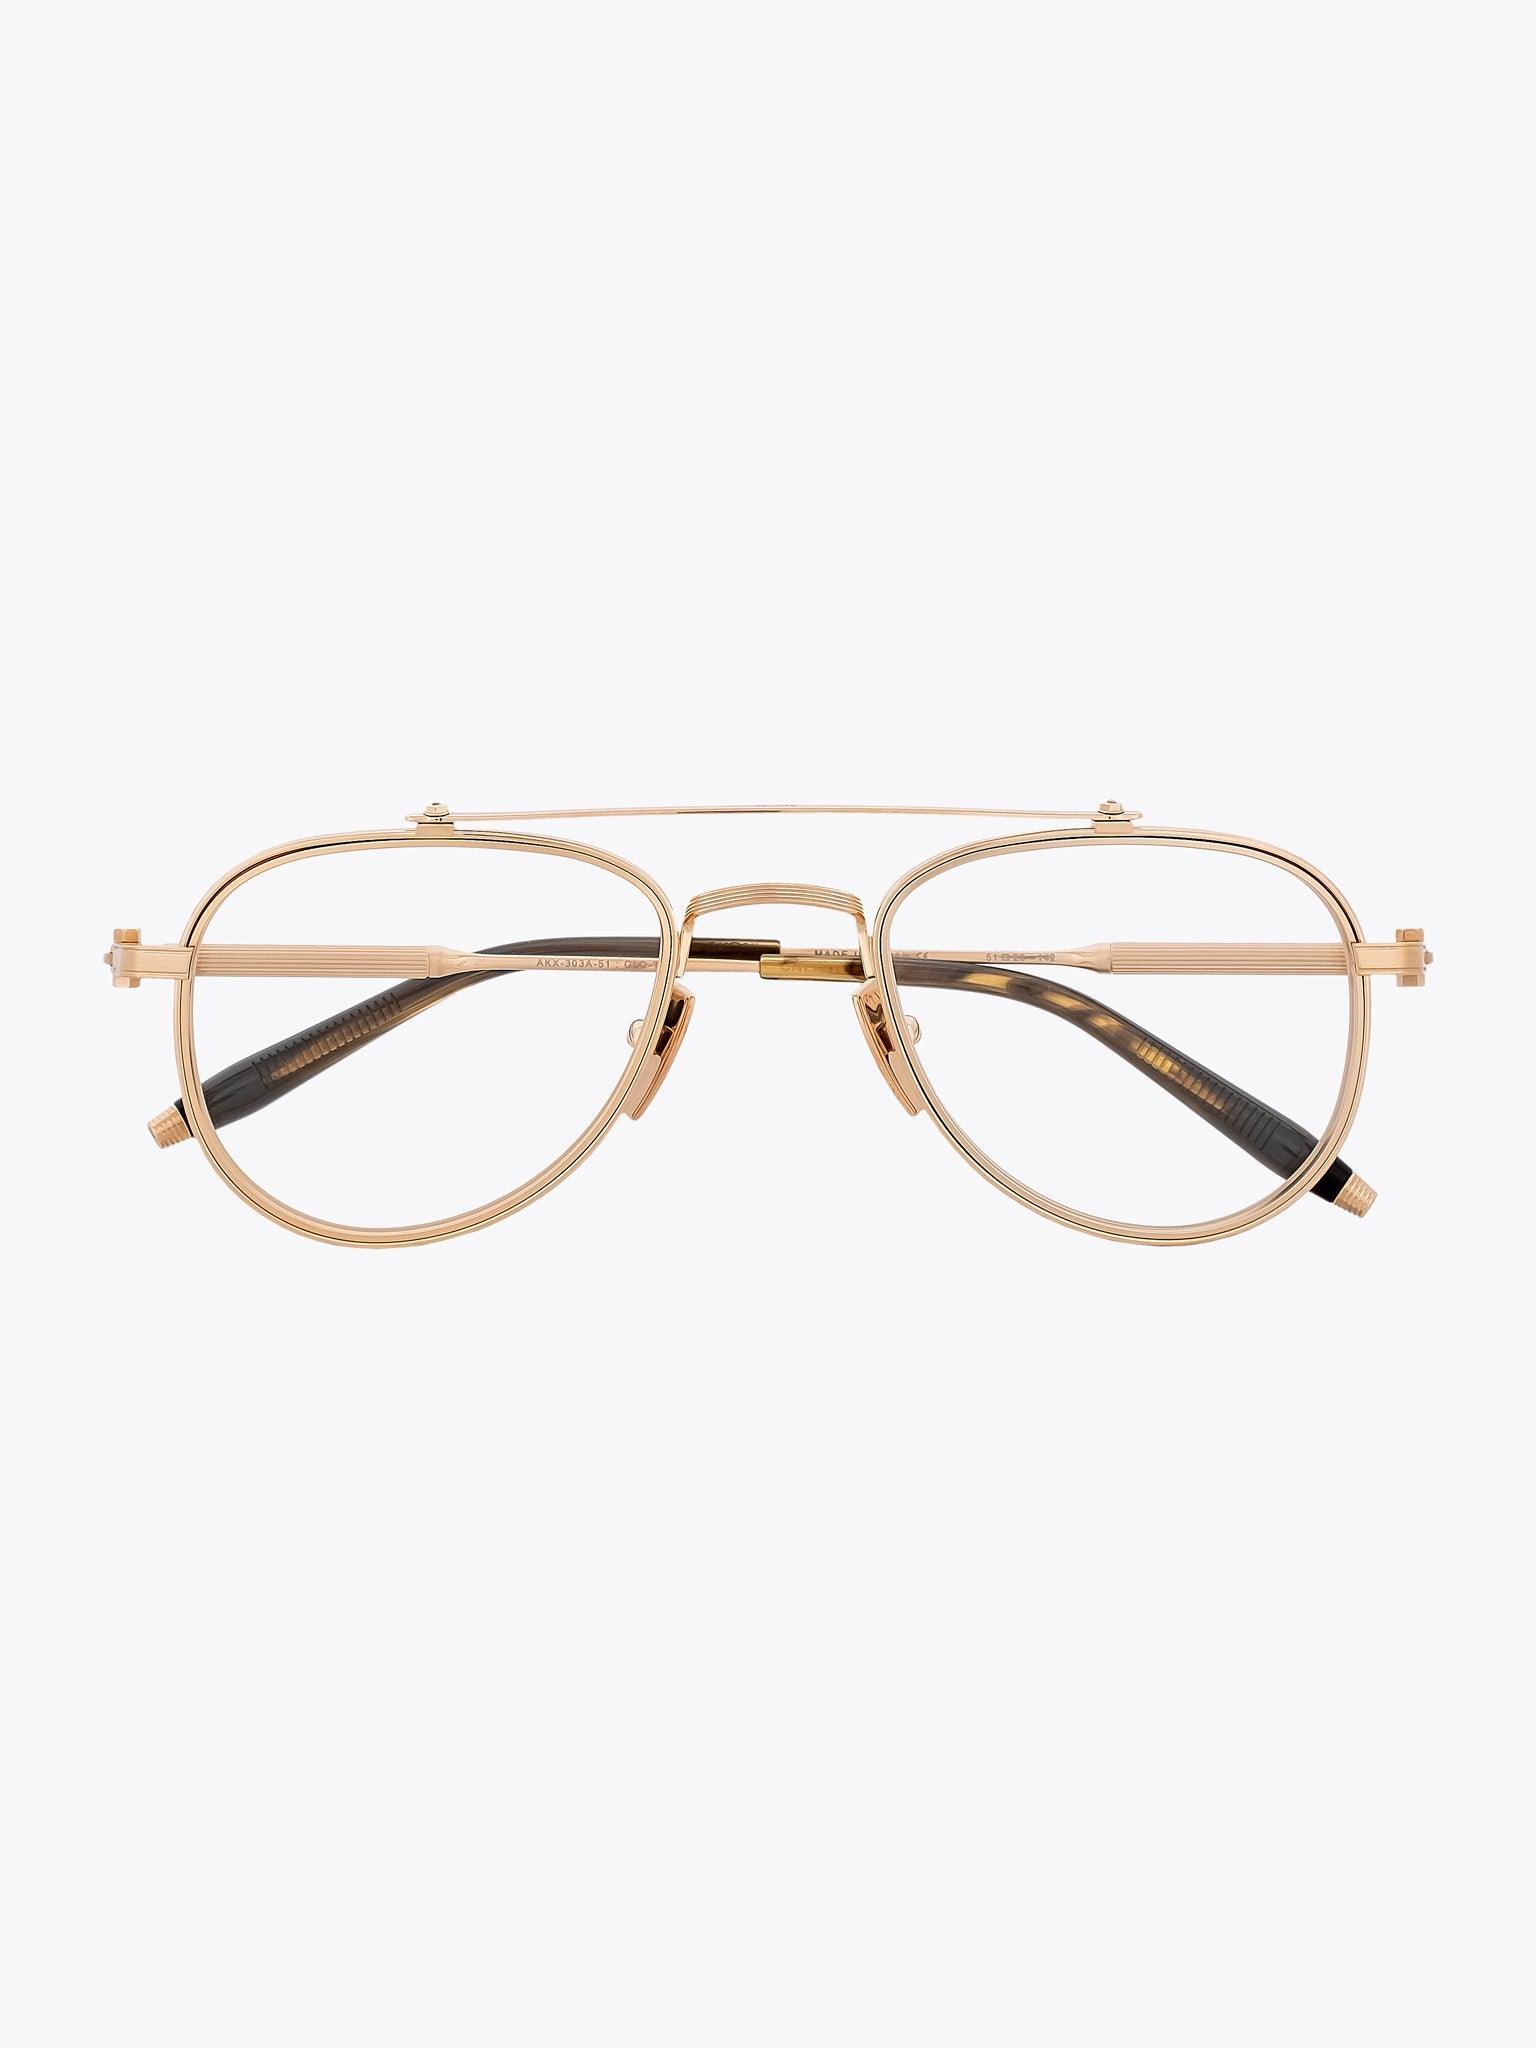 AKONI Calisto Gold Eyeglasses